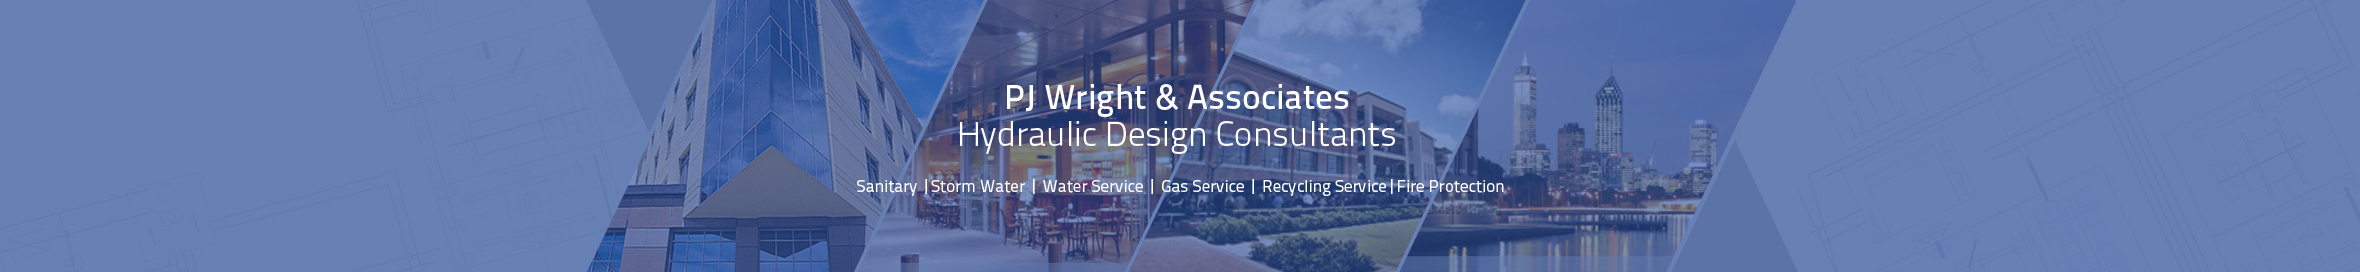 PJ Wright & Associates Hydraulic Design Consultants